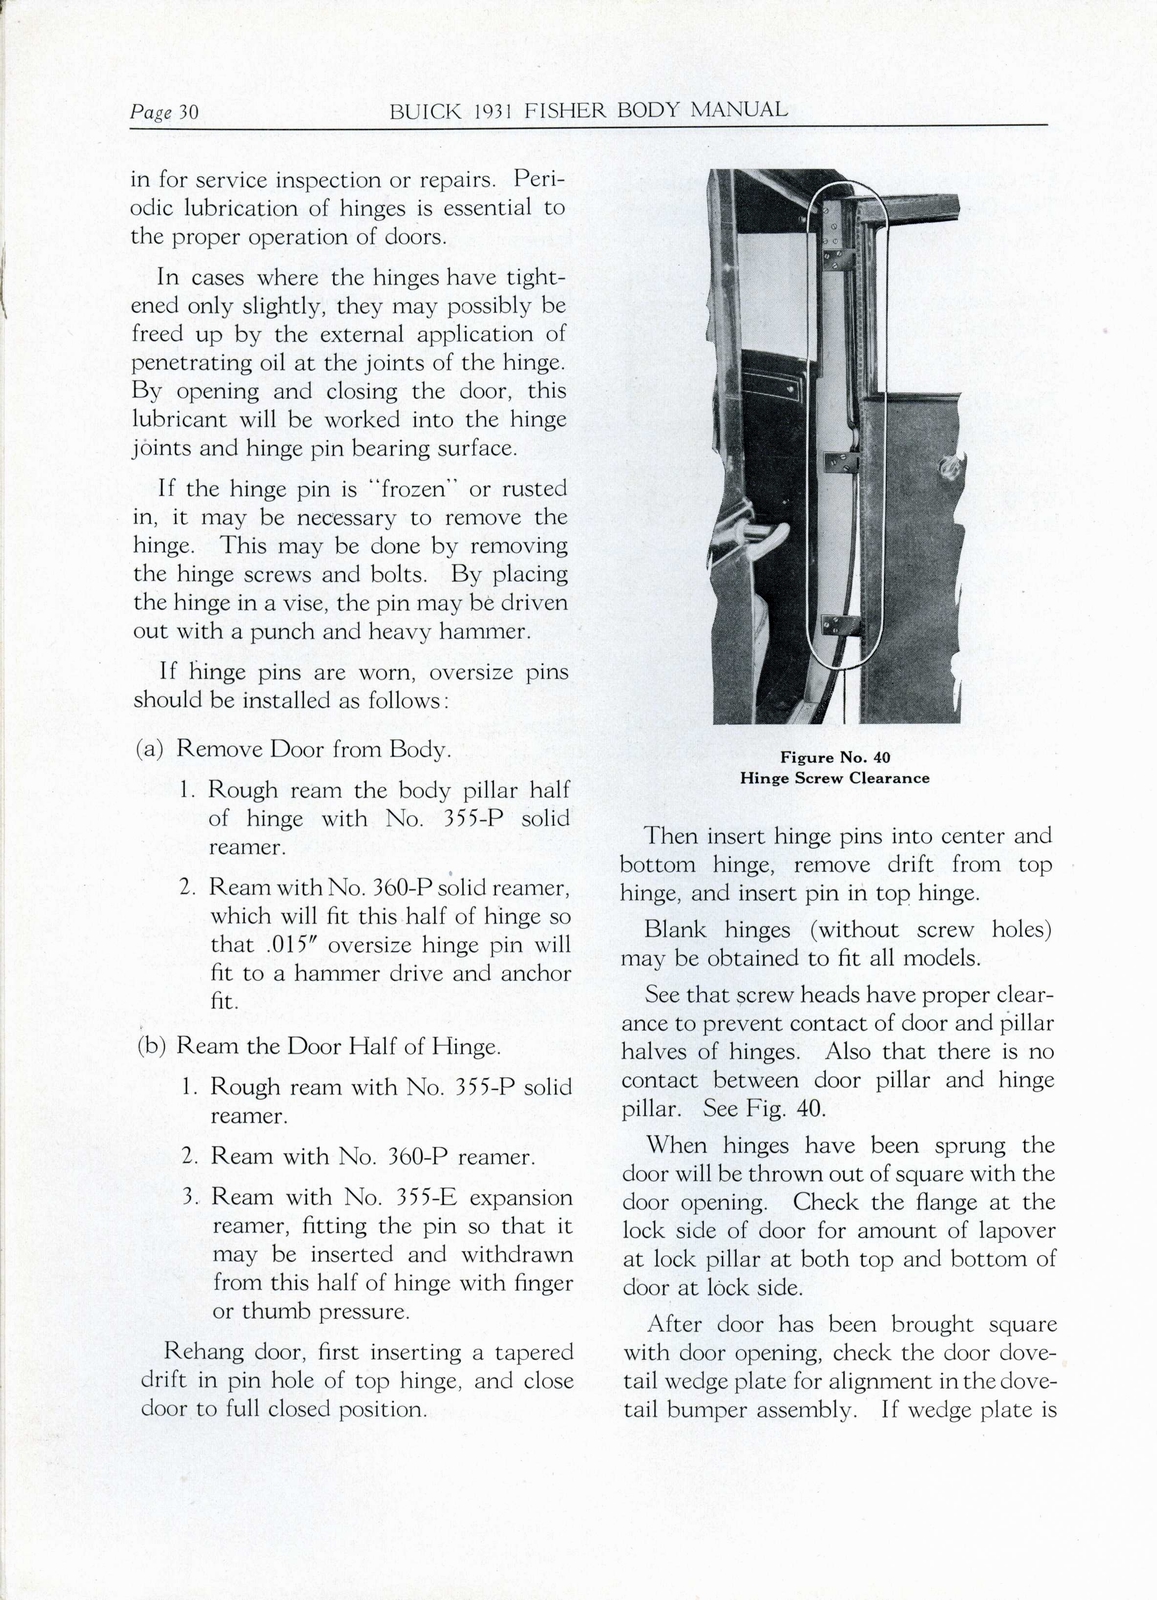 n_1931 Buick Fisher Body Manual-30.jpg